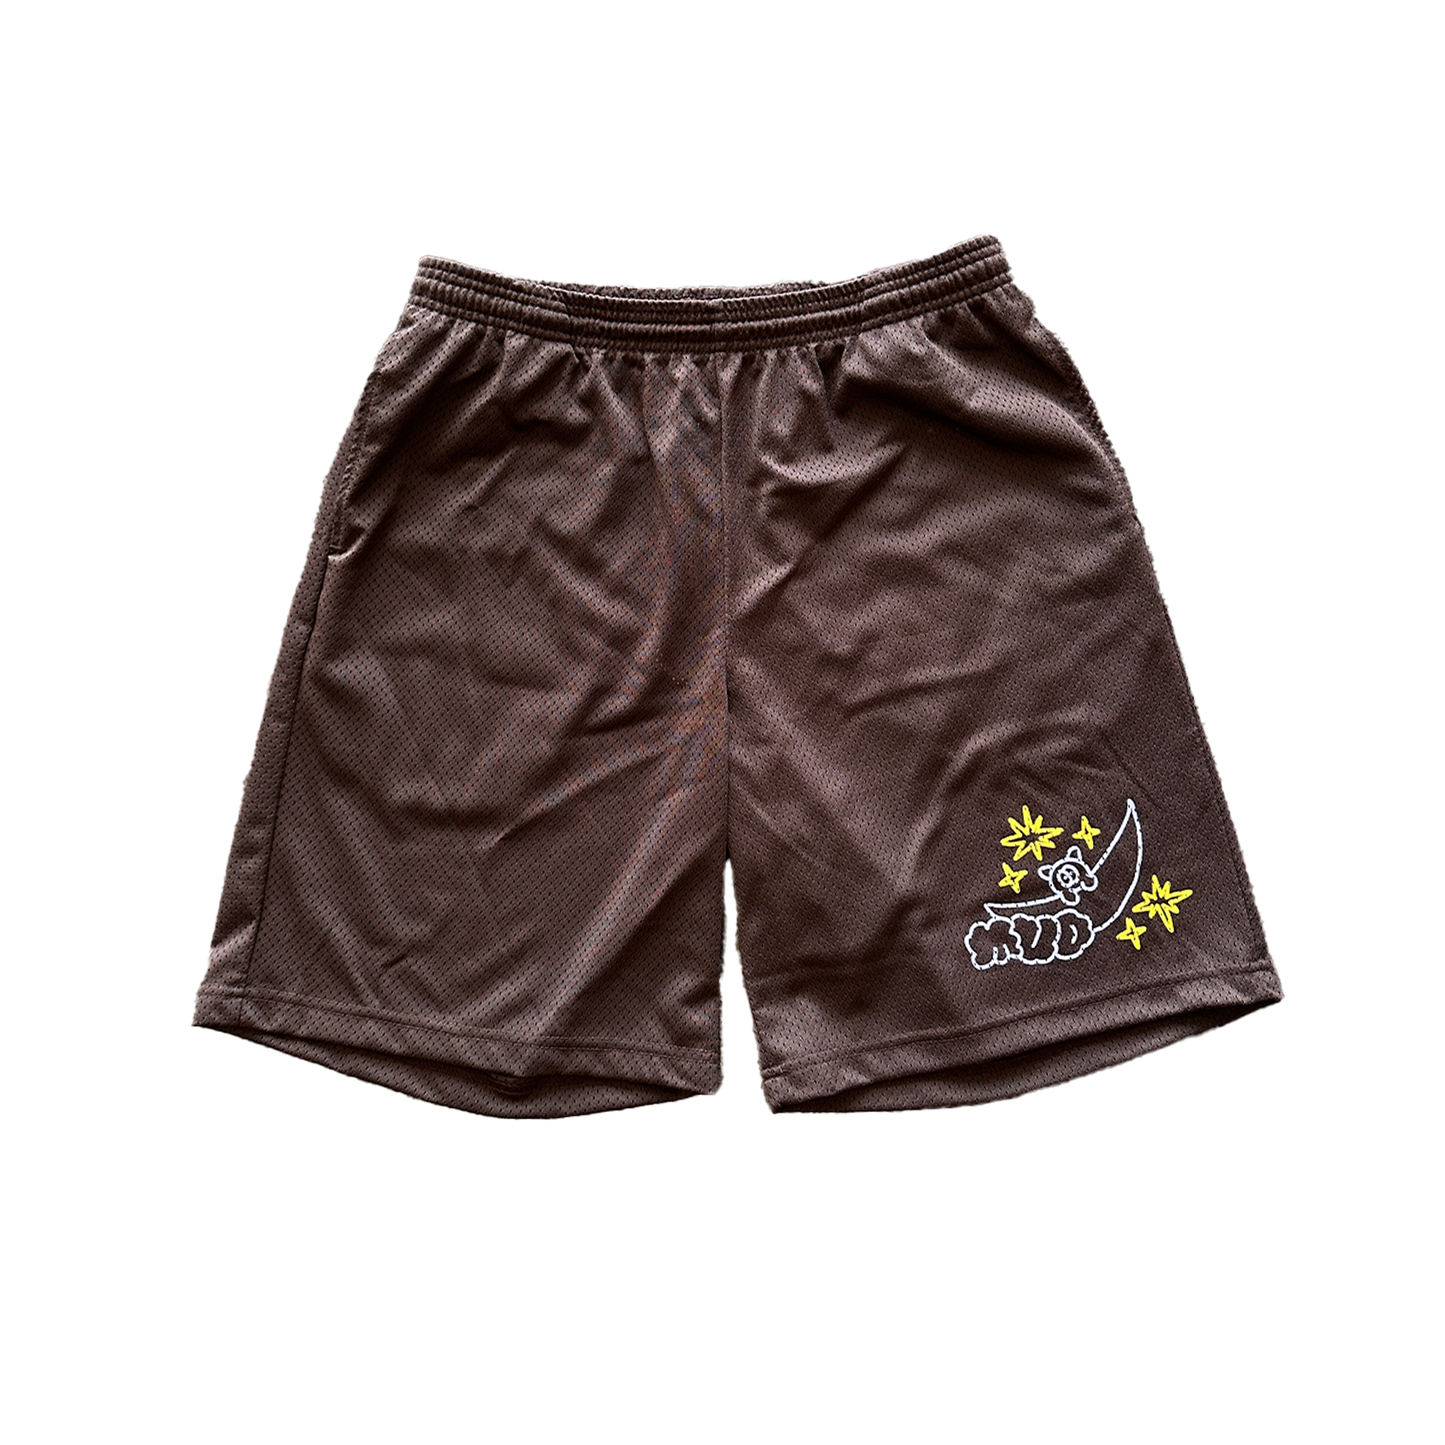 Mud Nightfall Shorts - Brown